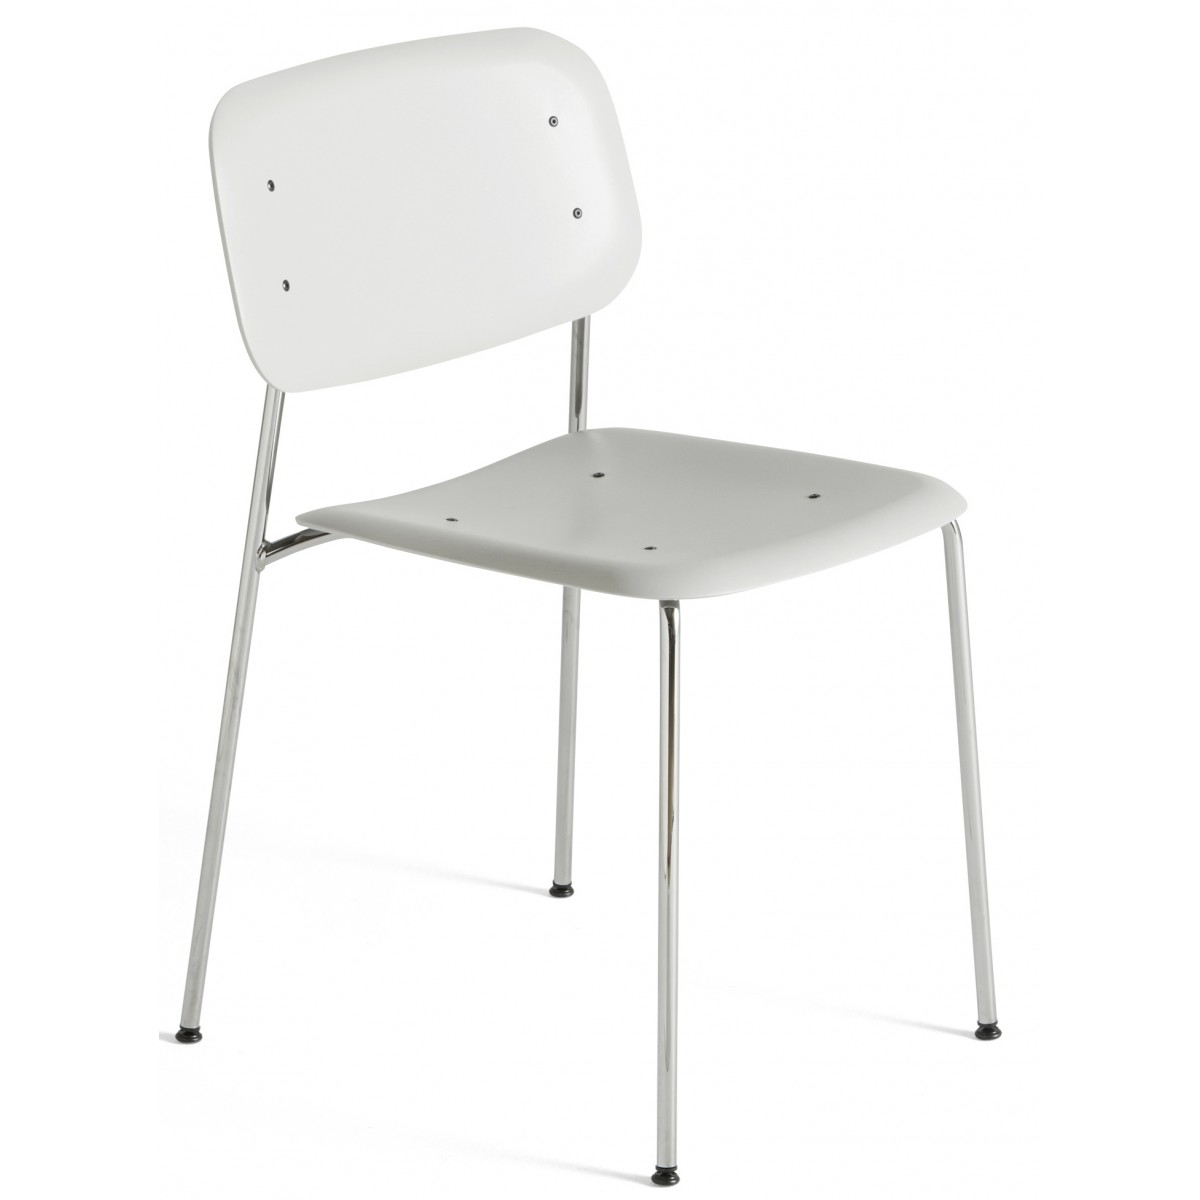 soft grey + chromed legs - Soft Edge 45 polypropylene chair